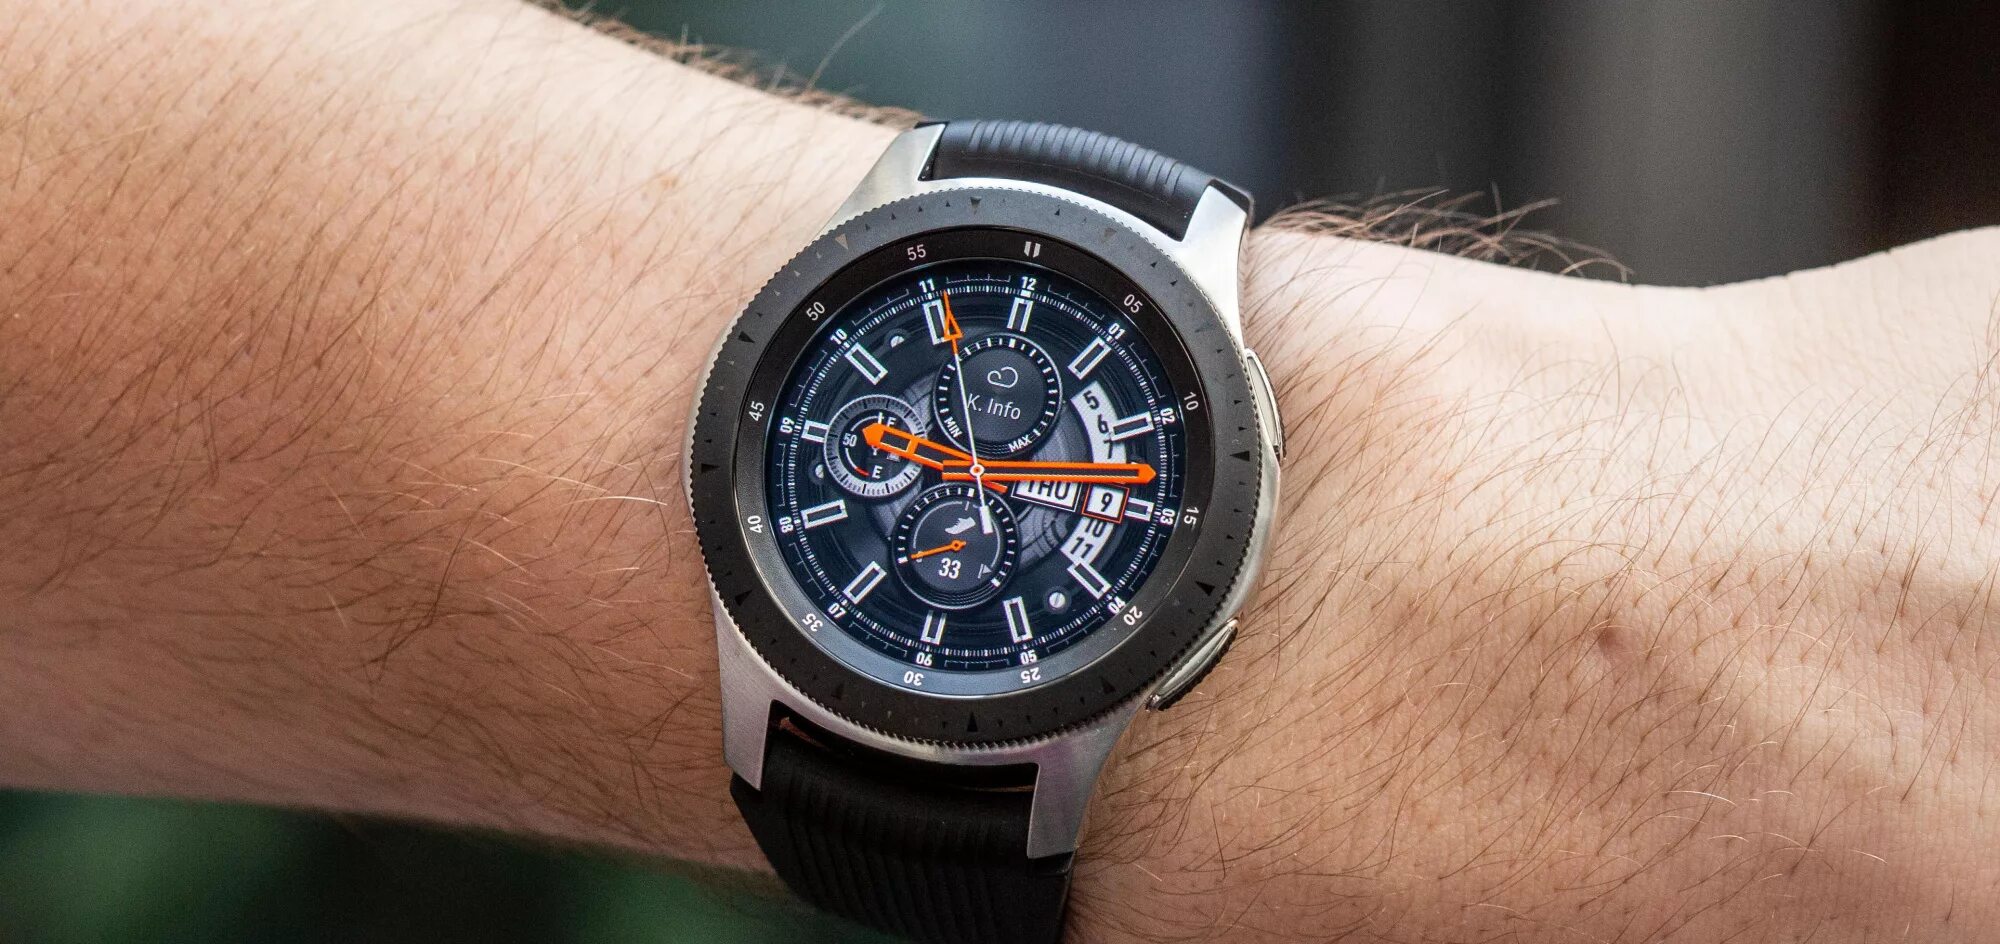 Samsung Galaxy watch 46mm. Часы самсунг Galaxy watch 46mm. Samsung Galaxy watch 46mm Silver. Часы Samsung Galaxy watch 46 mm.